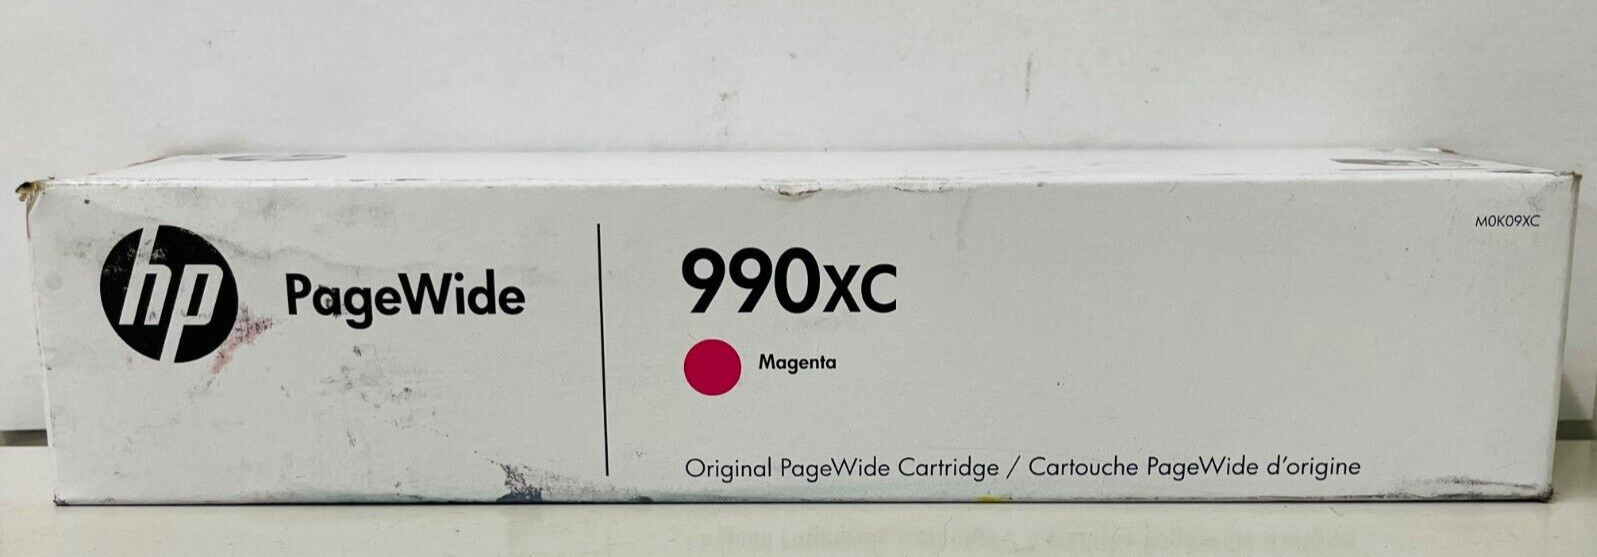 New Genuine HP 990XC Magenta PageWide Cartridge Box